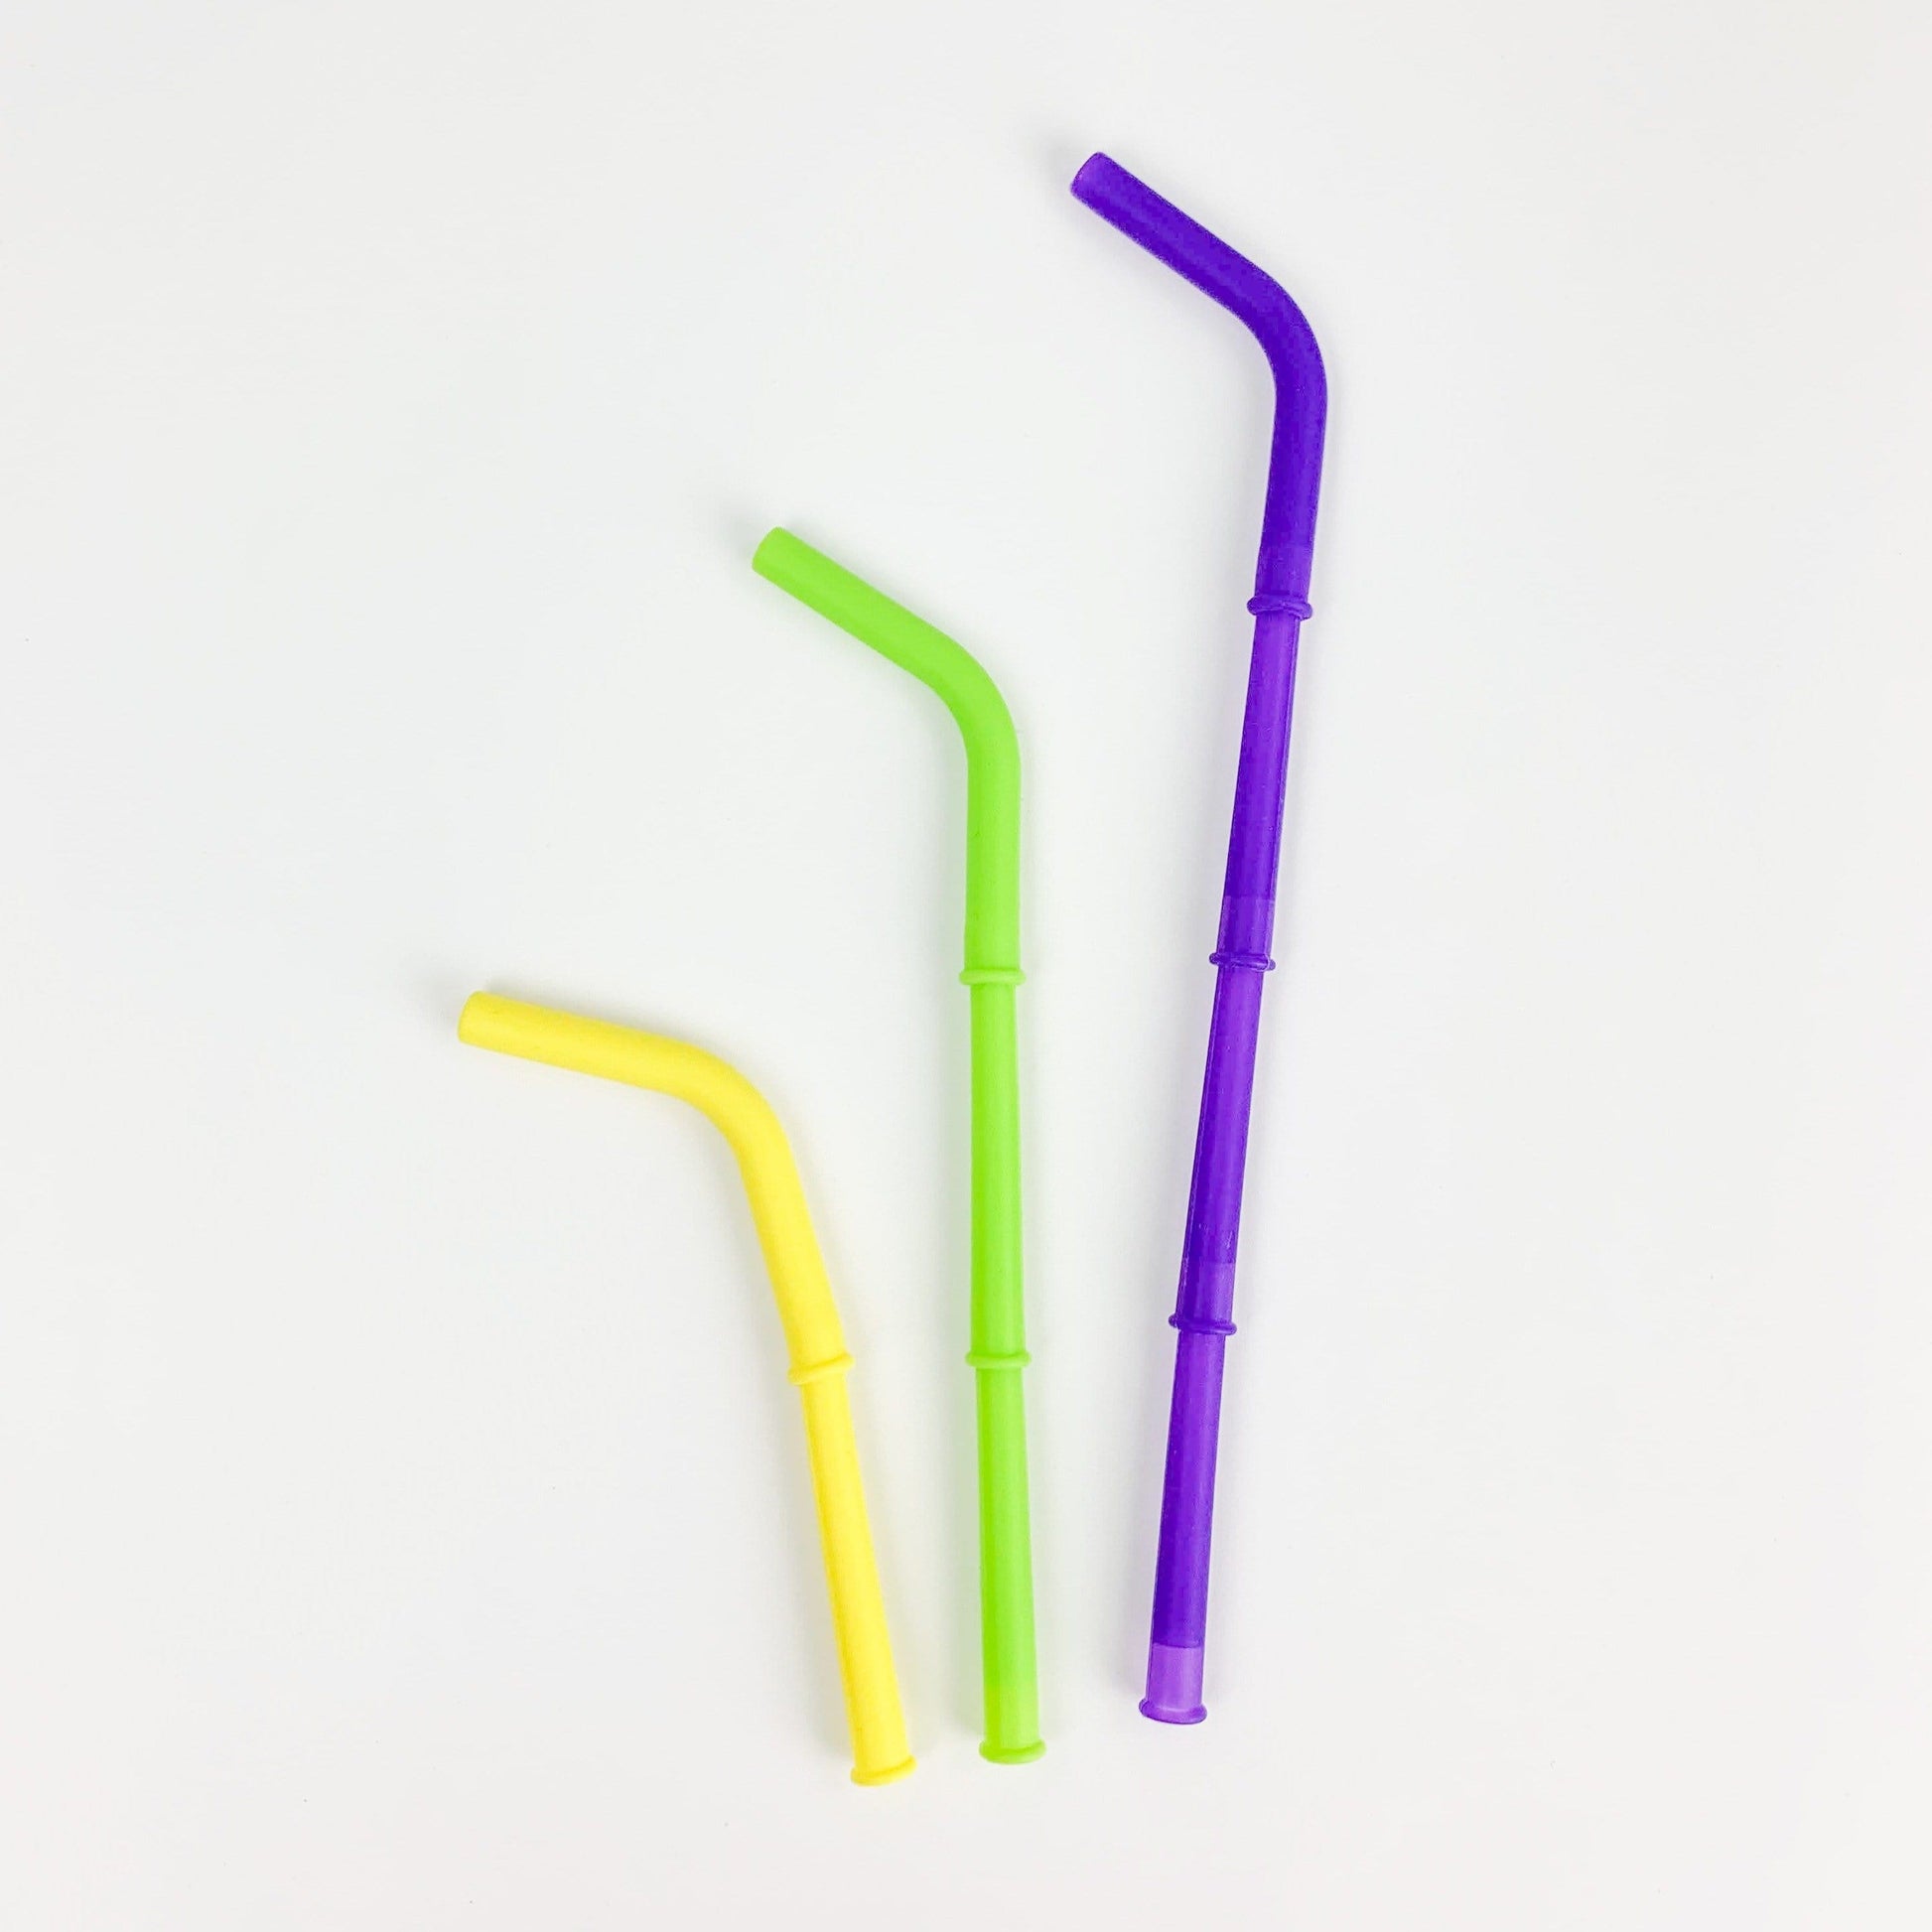 Reusable drinking straws, bulk silicone bendy collapsible straws